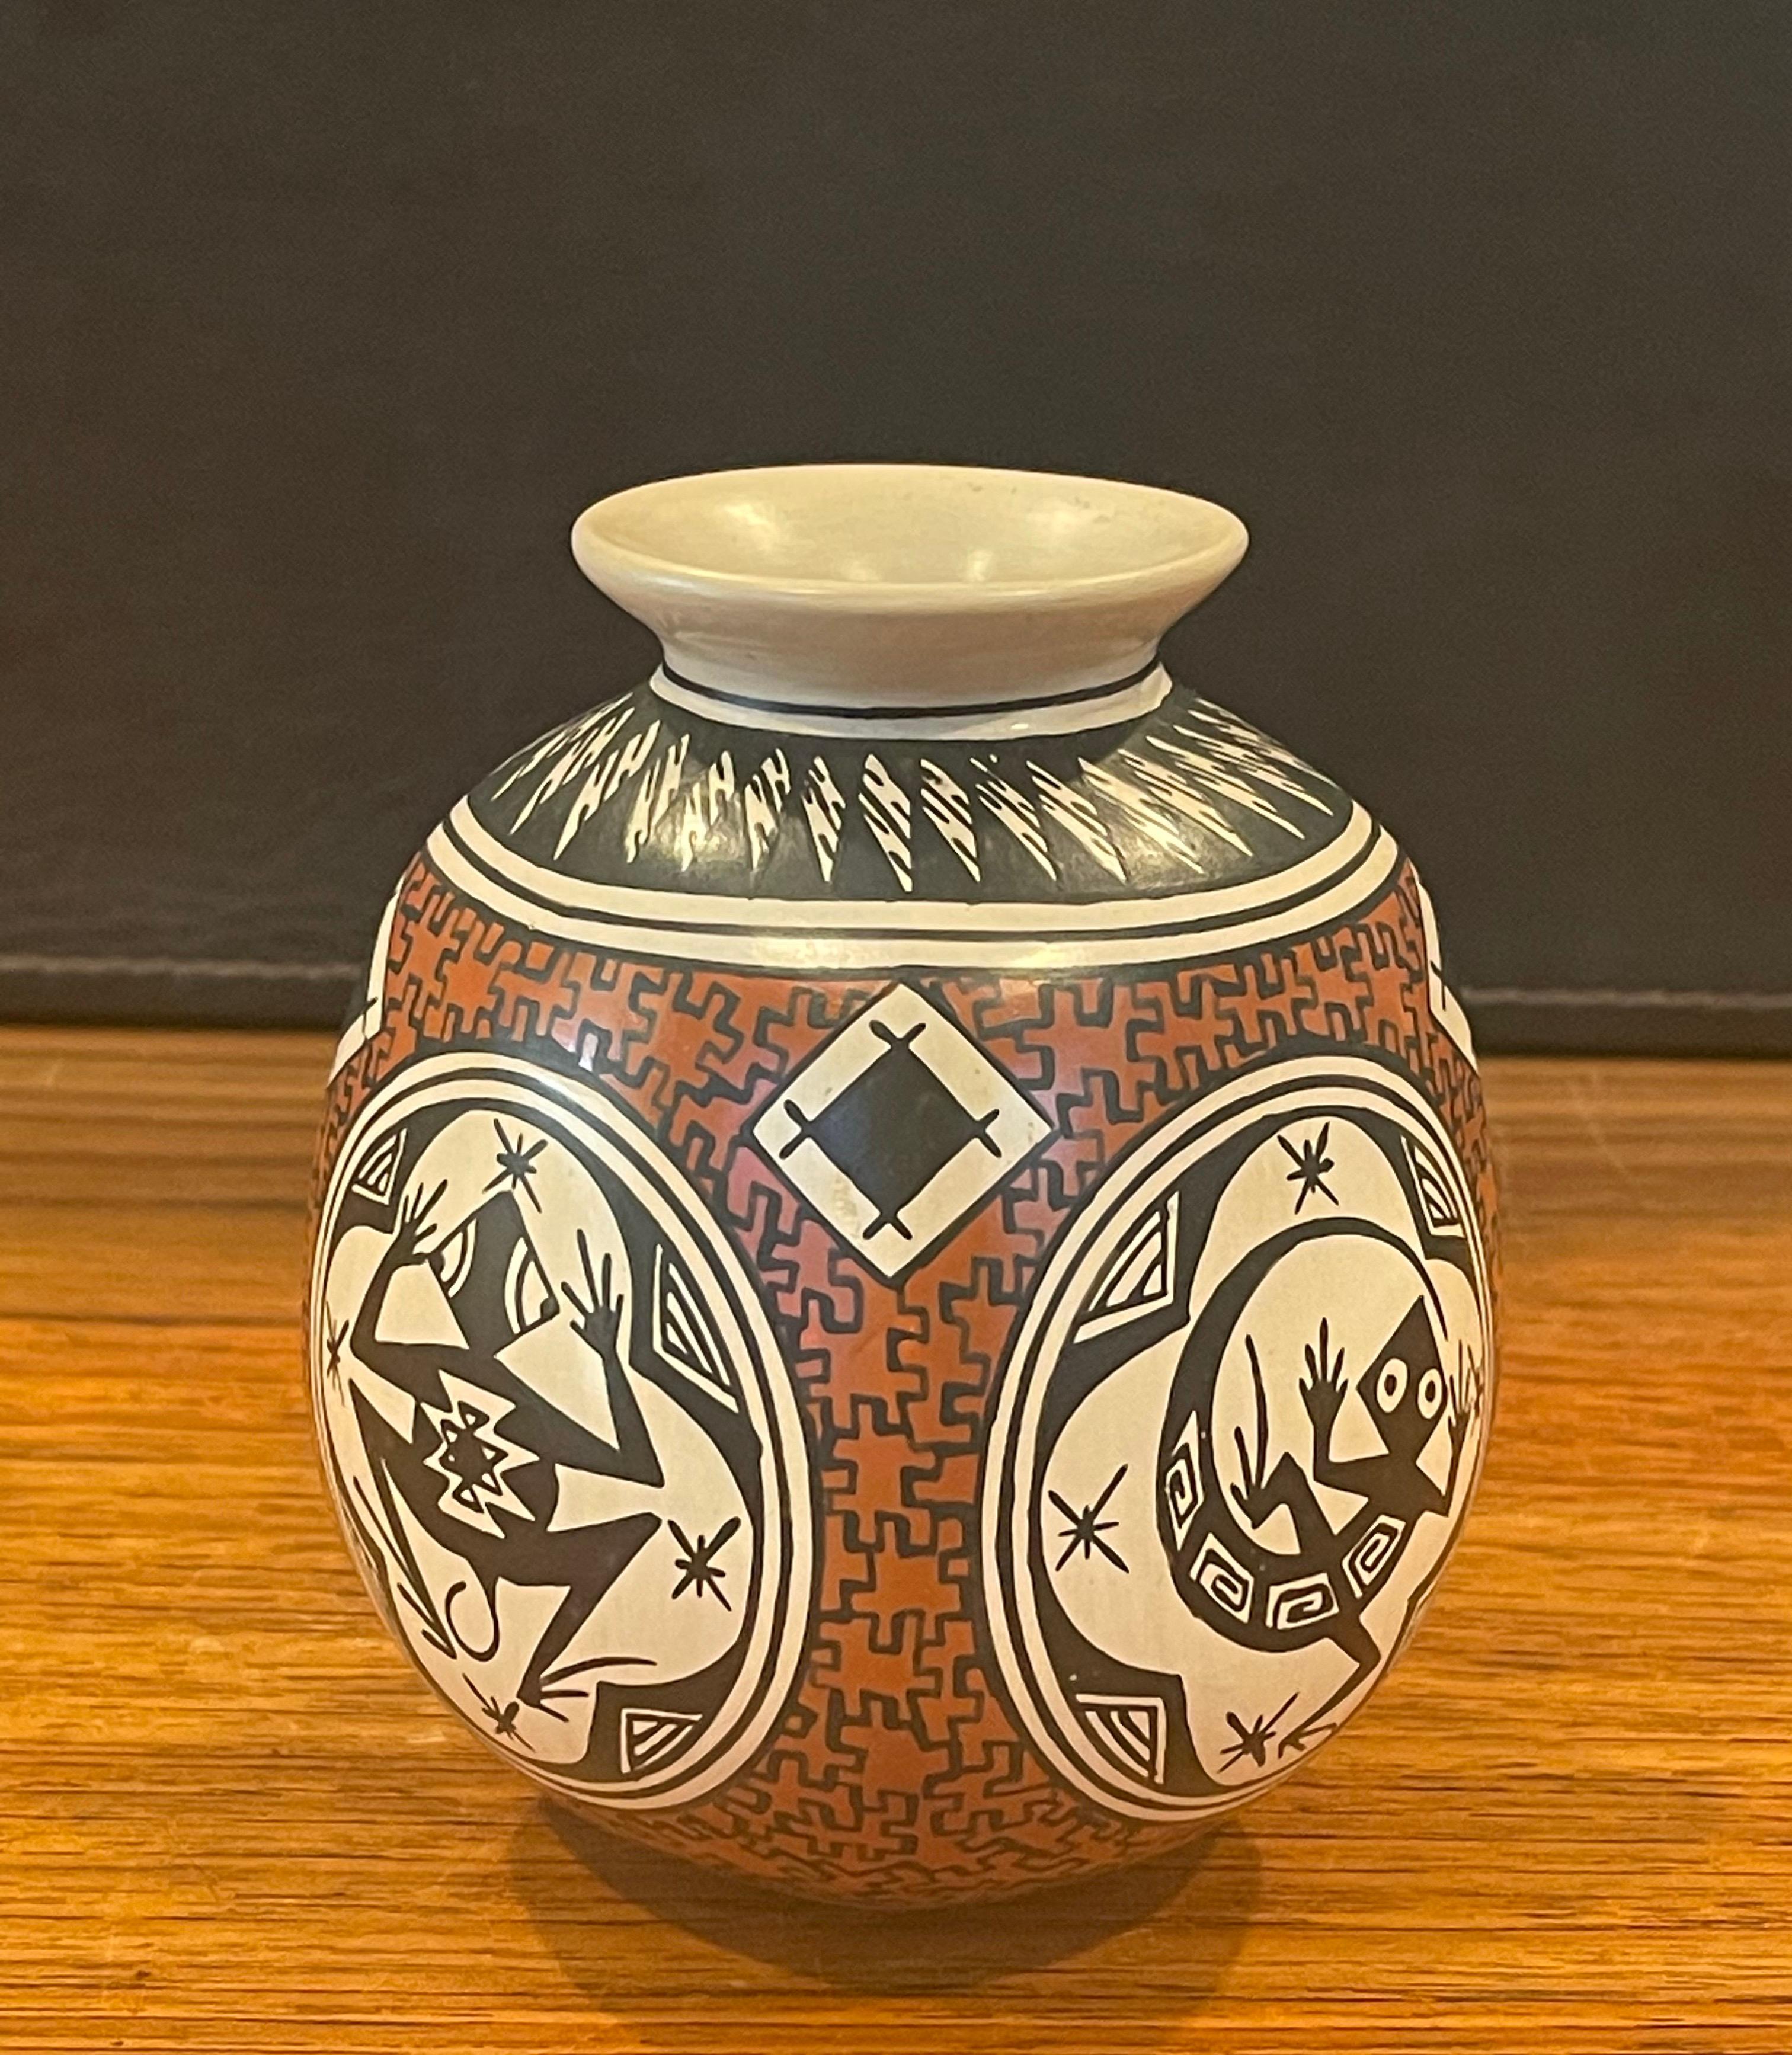 Polychromed Mata Ortiz Polychrome Pottery Vasel by Nancy Heras de Martinez For Sale